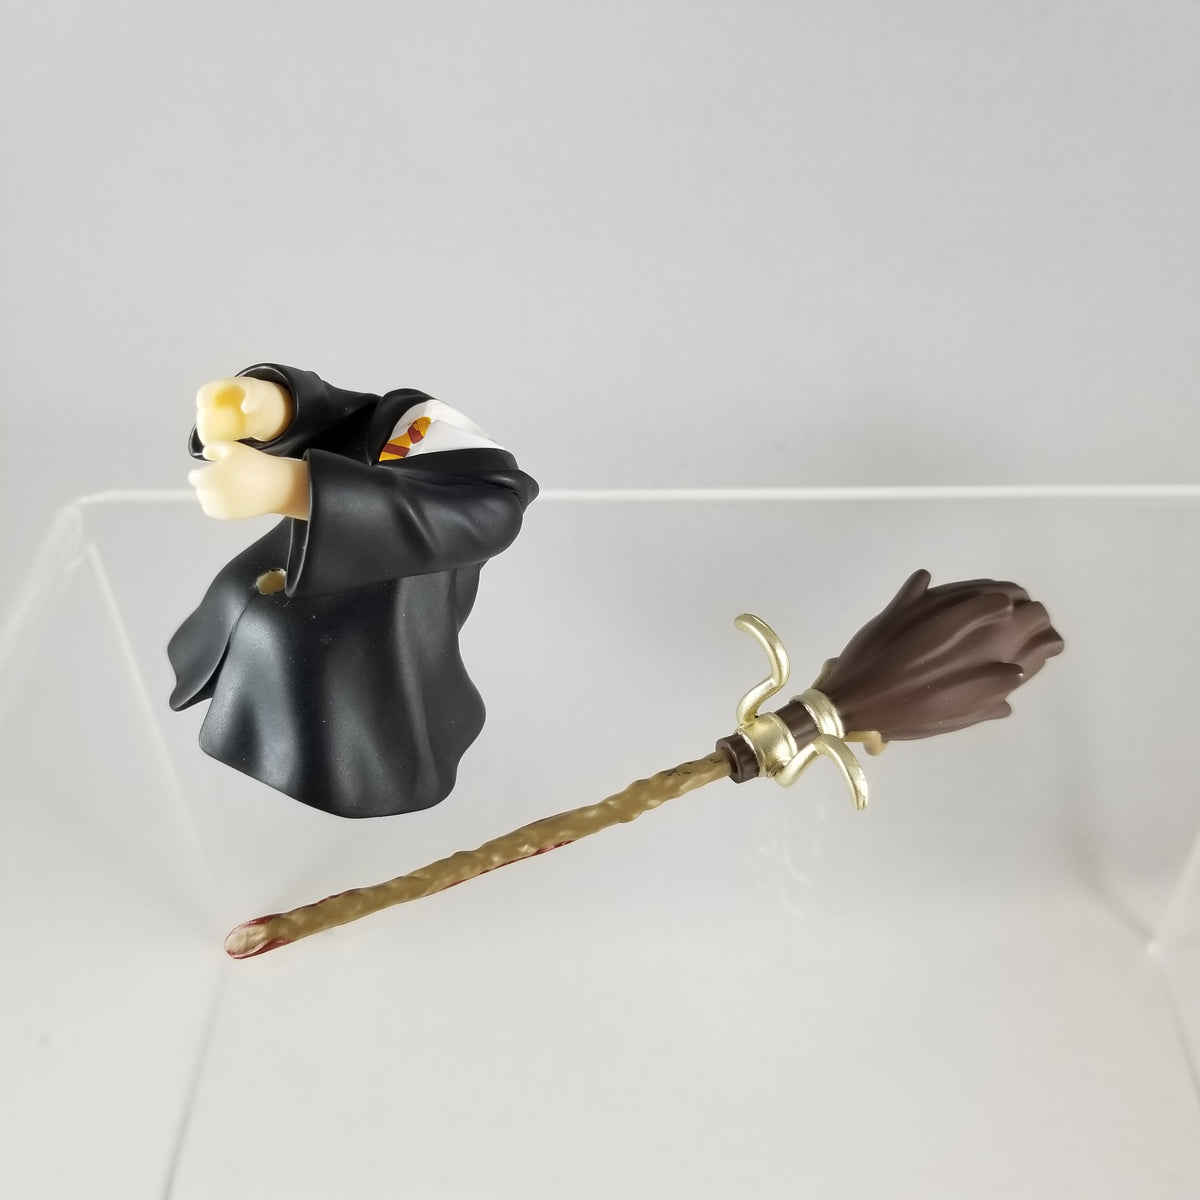 Firebolt Floating Pen Harry Potter - Boutique Harry Potter